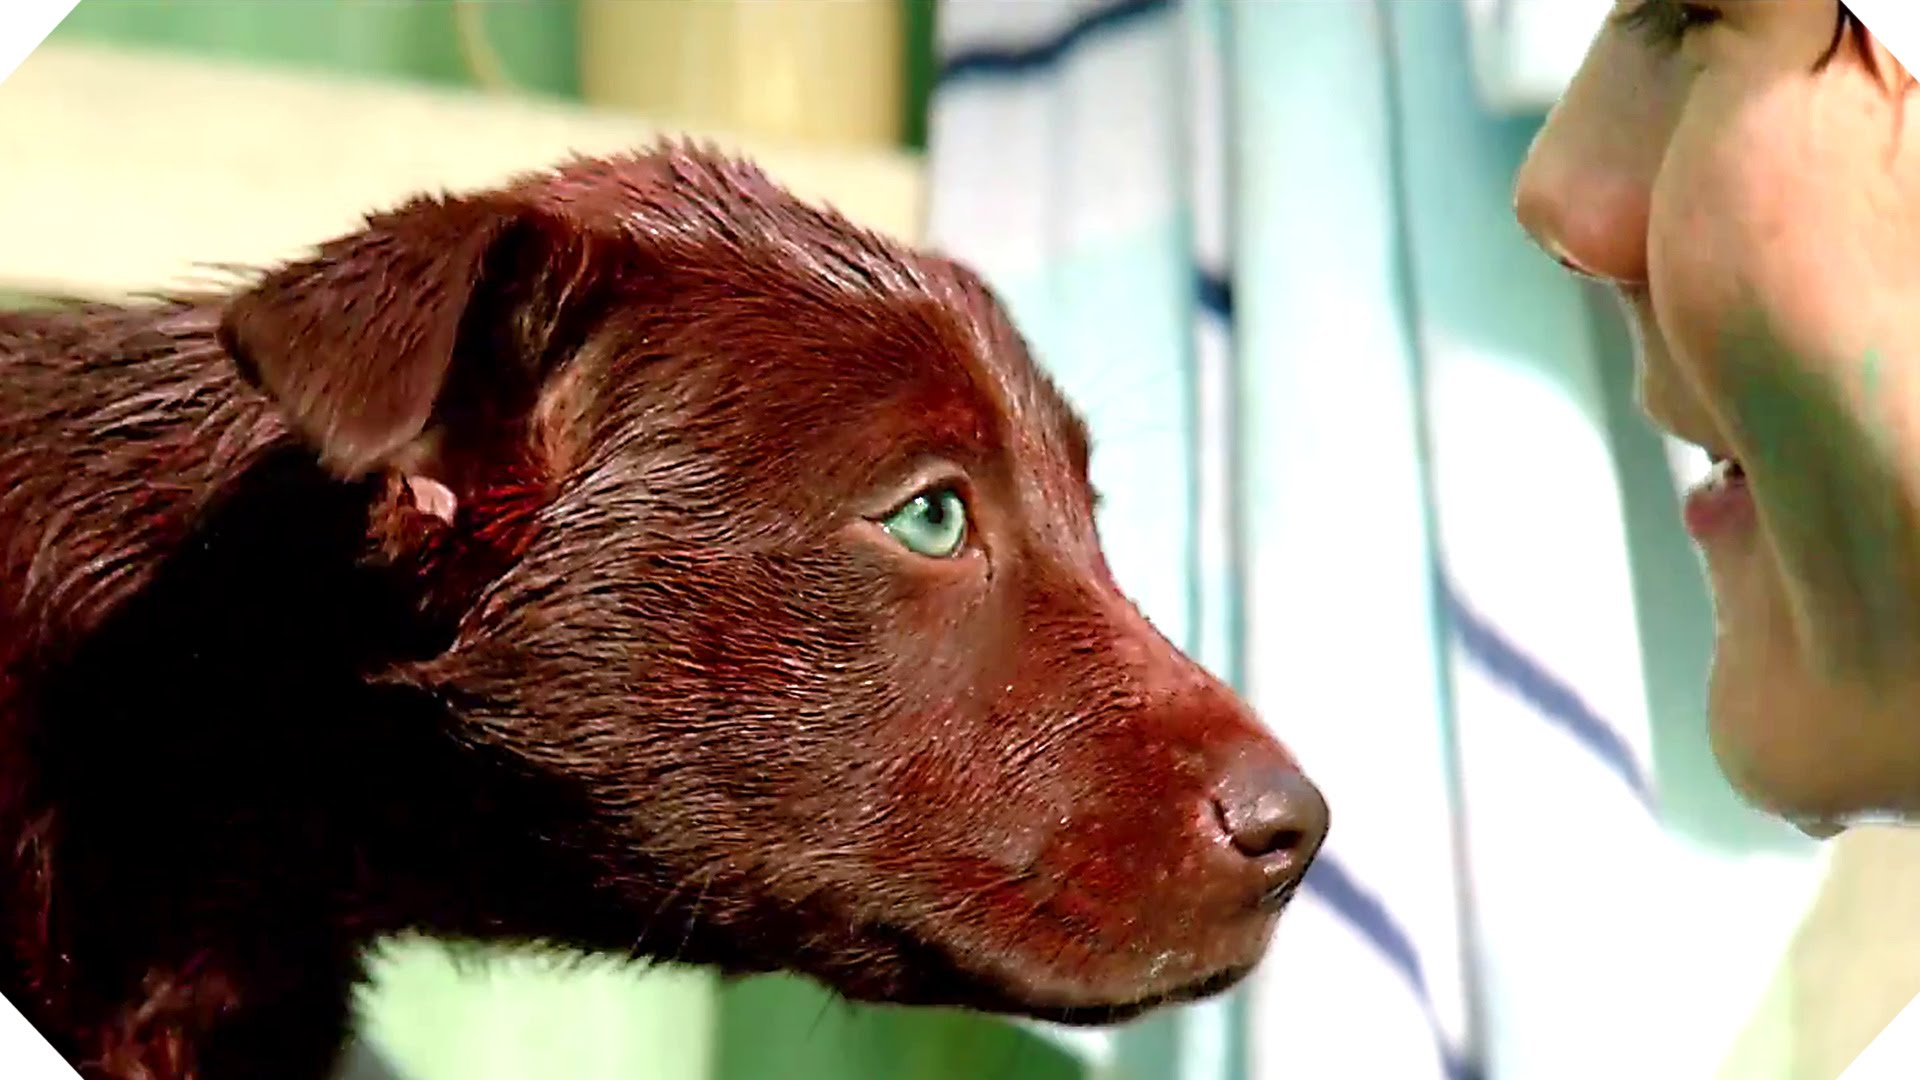 RED DOG: TRUE BLUE Trailer (Dog Movie, Family - 2016) - YouTube